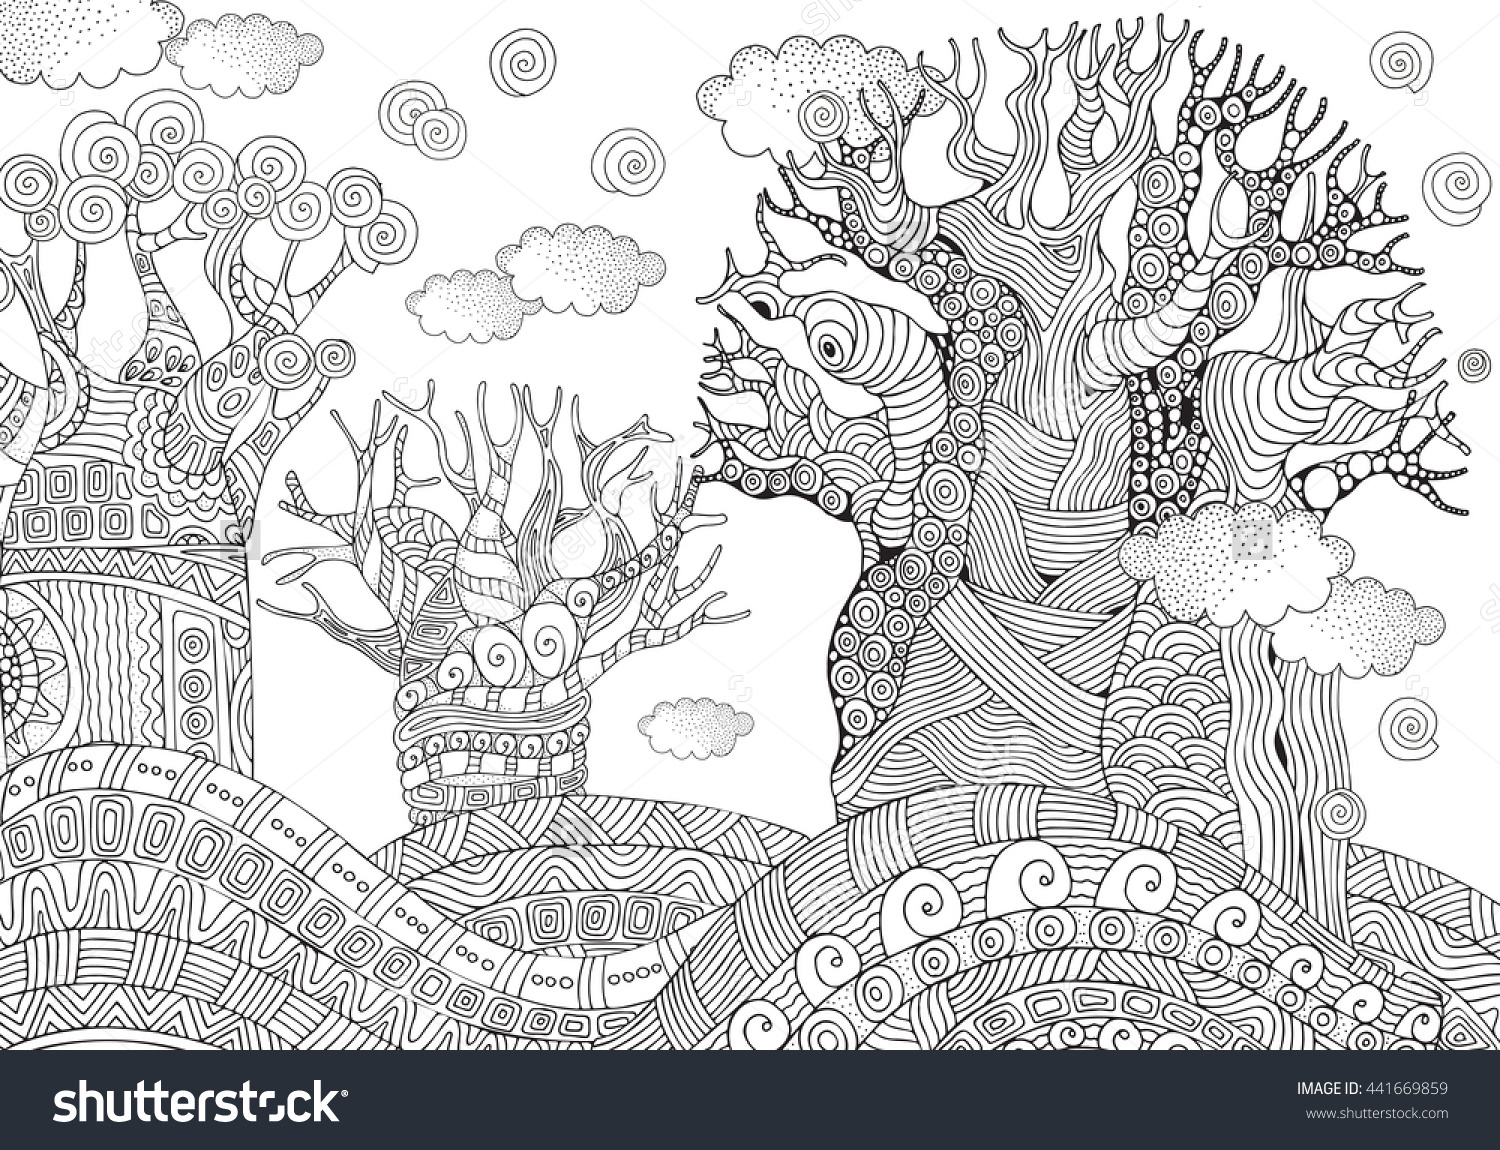 Baobab Tree coloring #2, Download drawings